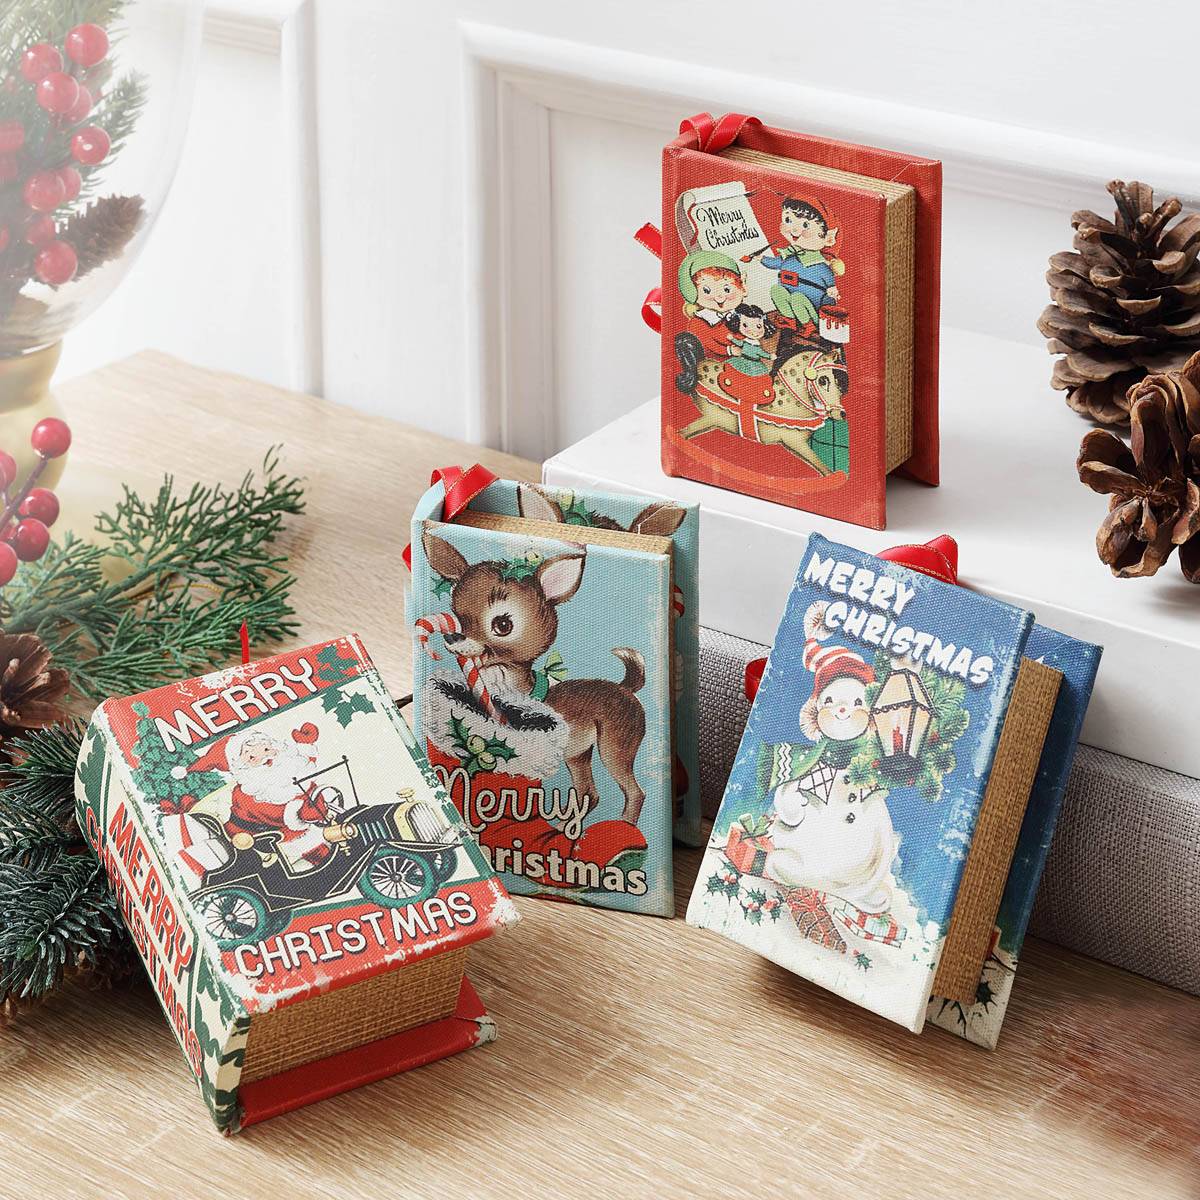 Mr. Christmas Set Of 4 Nostalgic Musical Songbook Ornaments